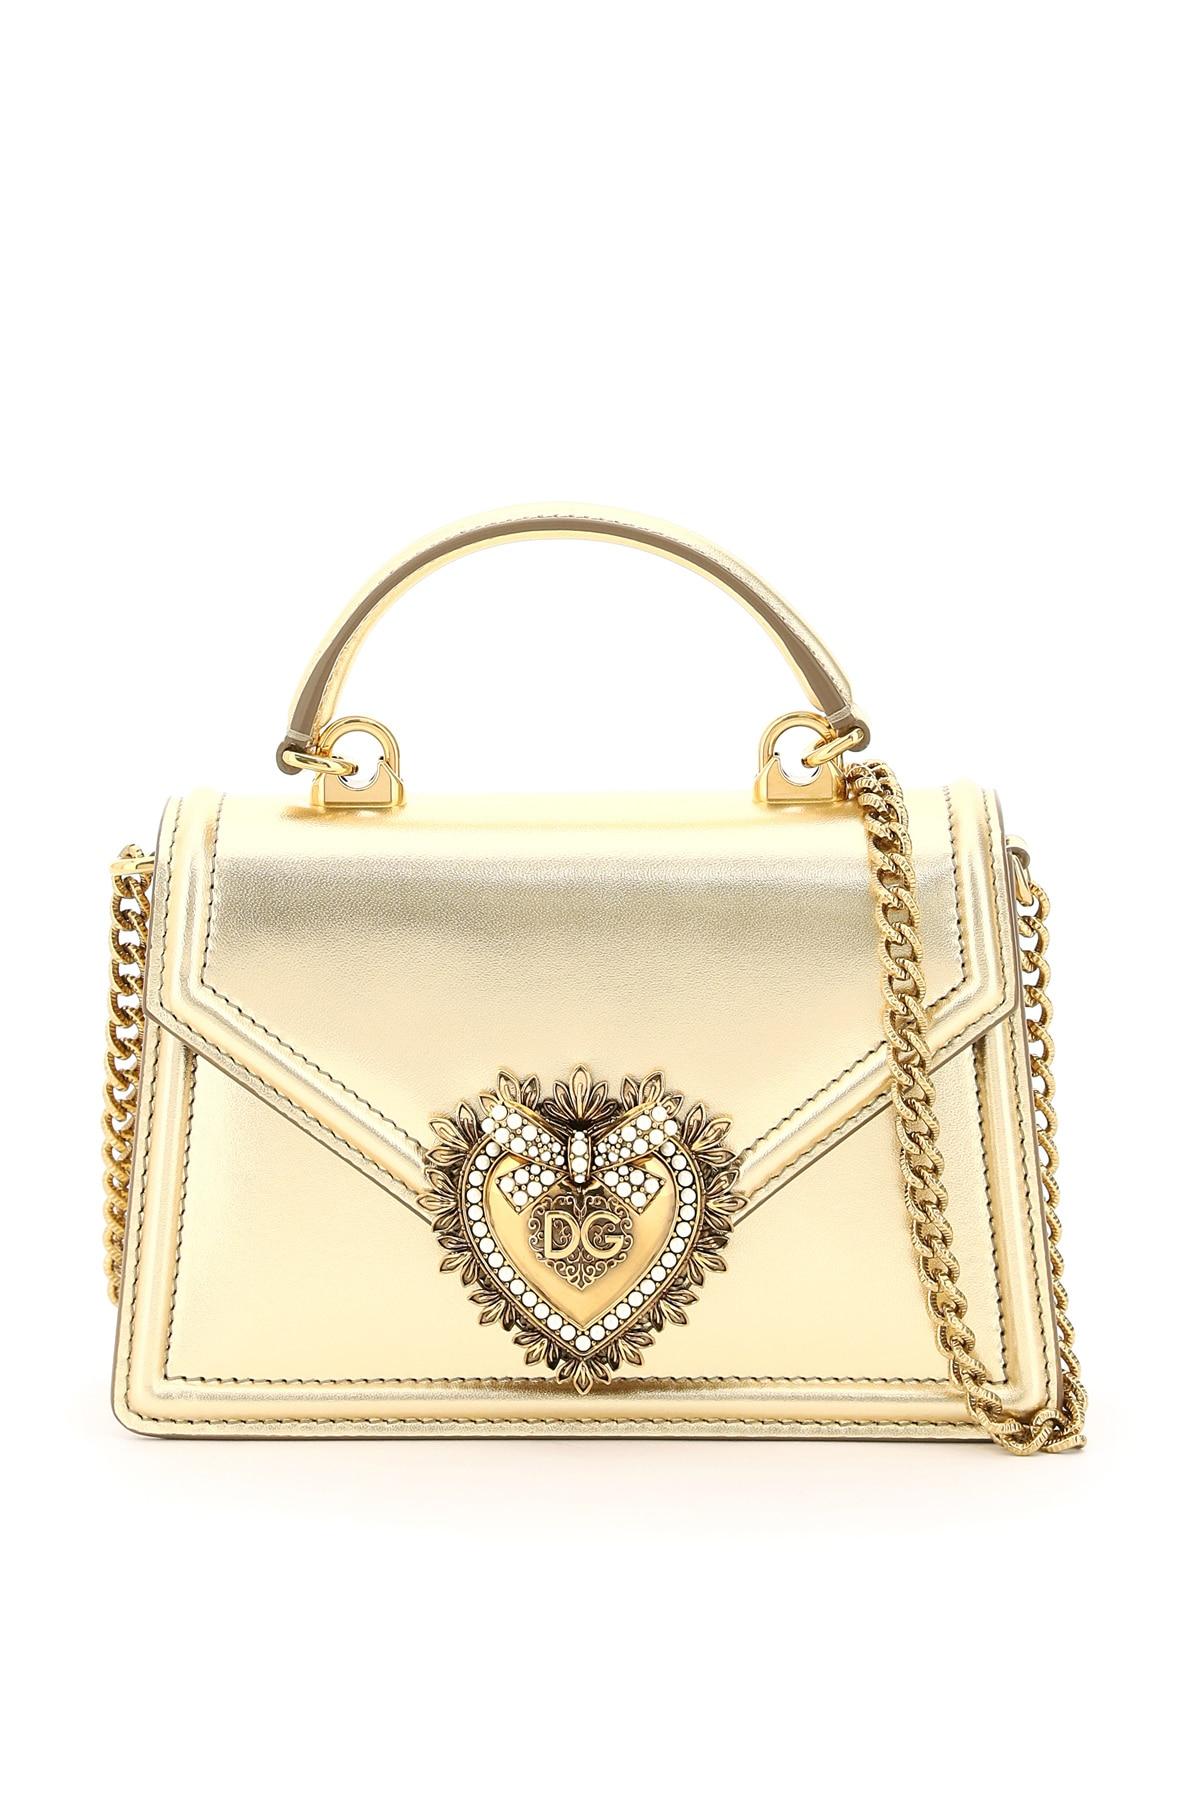 Dolce & Gabbana Small Devotion Bag in Metallic | Lyst